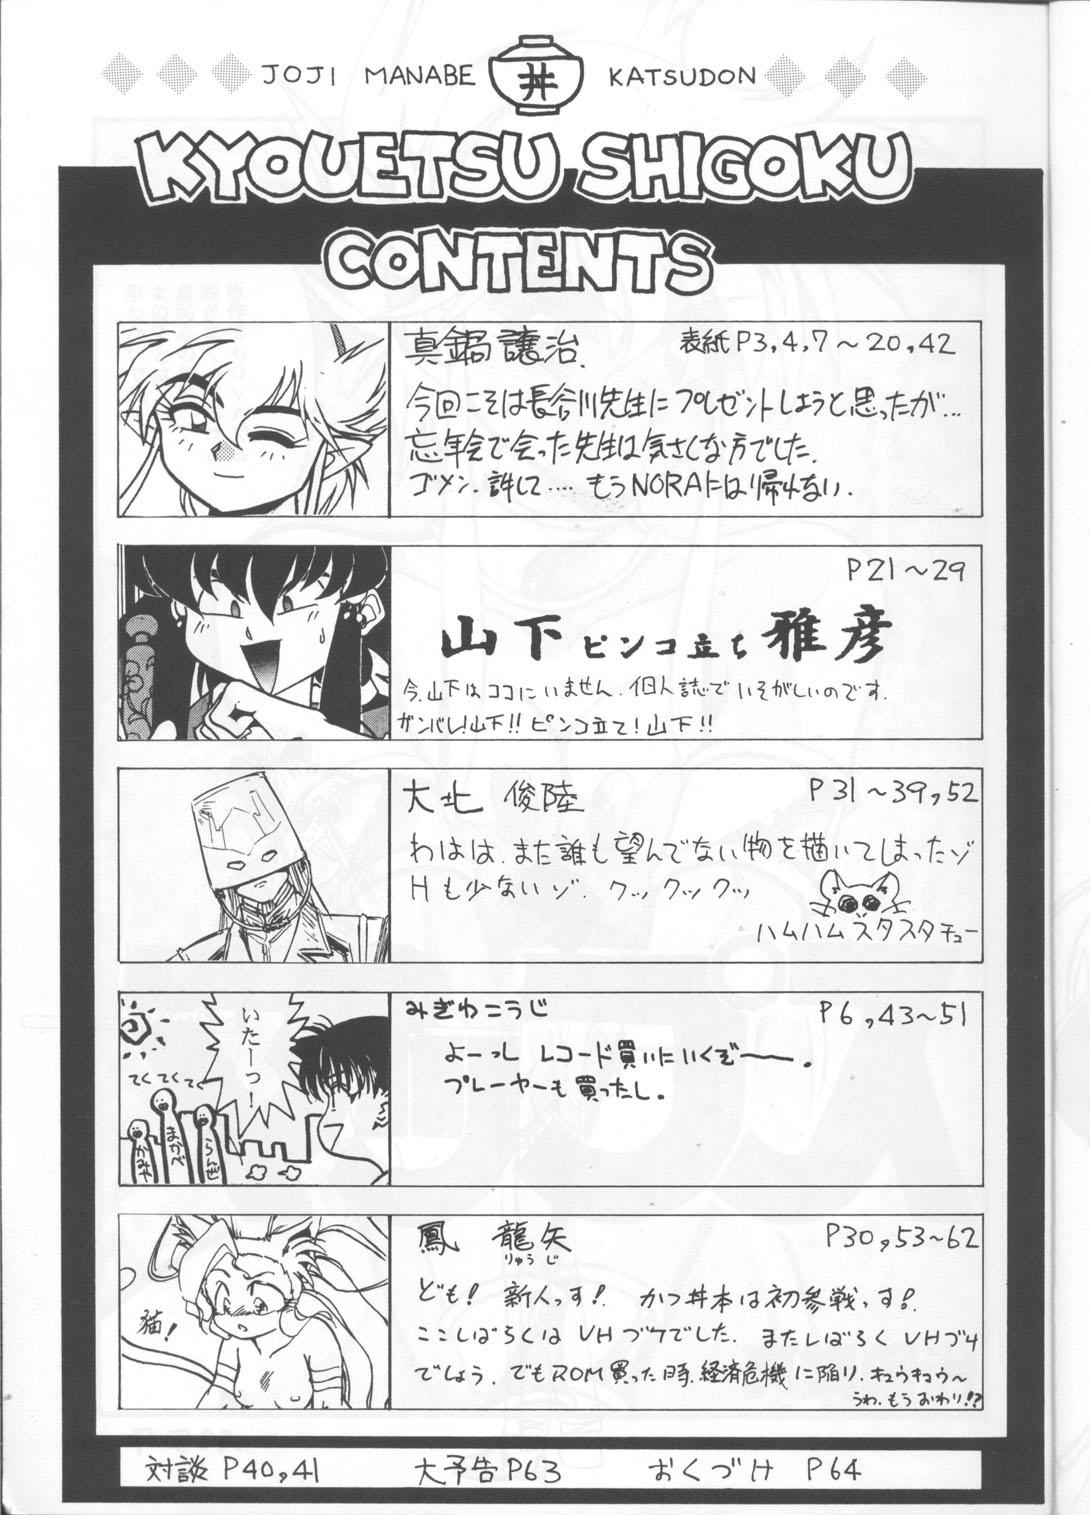 Handsome Kyouetsu Shigoku - Darkstalkers Tenchi muyo Gundam wing Dirty pair flash Armitage iii Tokimeki tonight Maps Teenies - Page 4